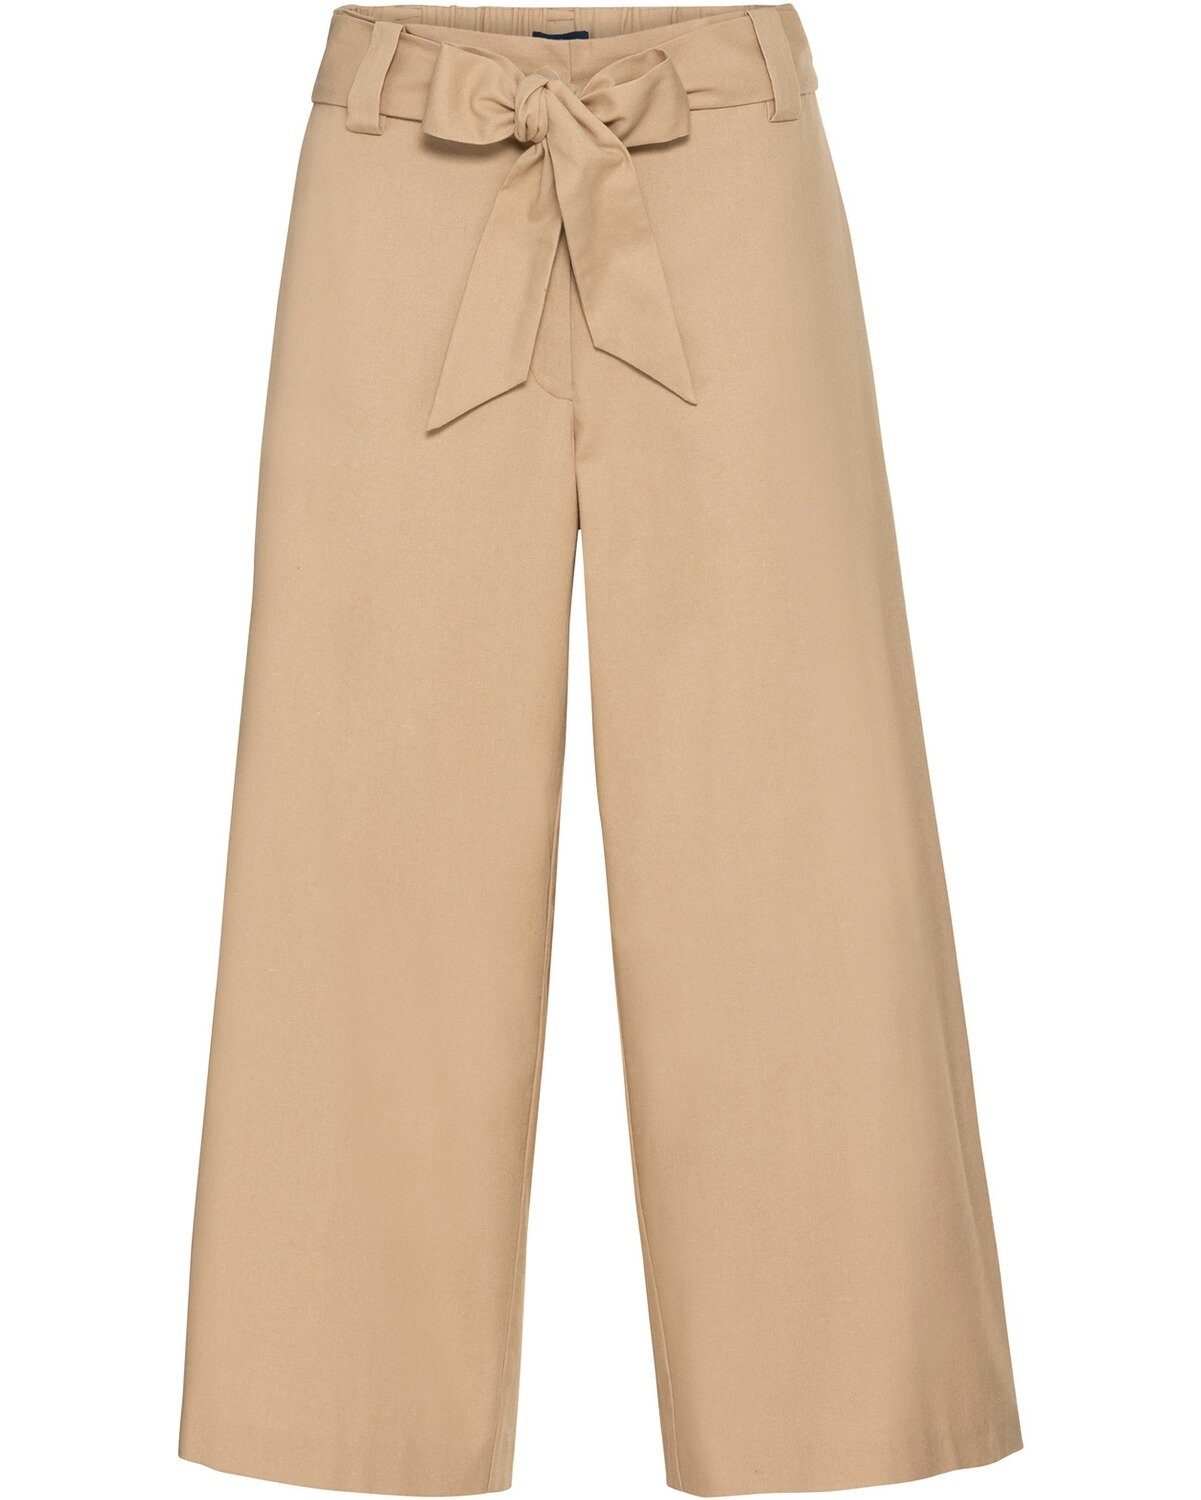 Damen Hosen Highmoor 5-Pocket-Hose 7/8-Hose mit Bindegürtel